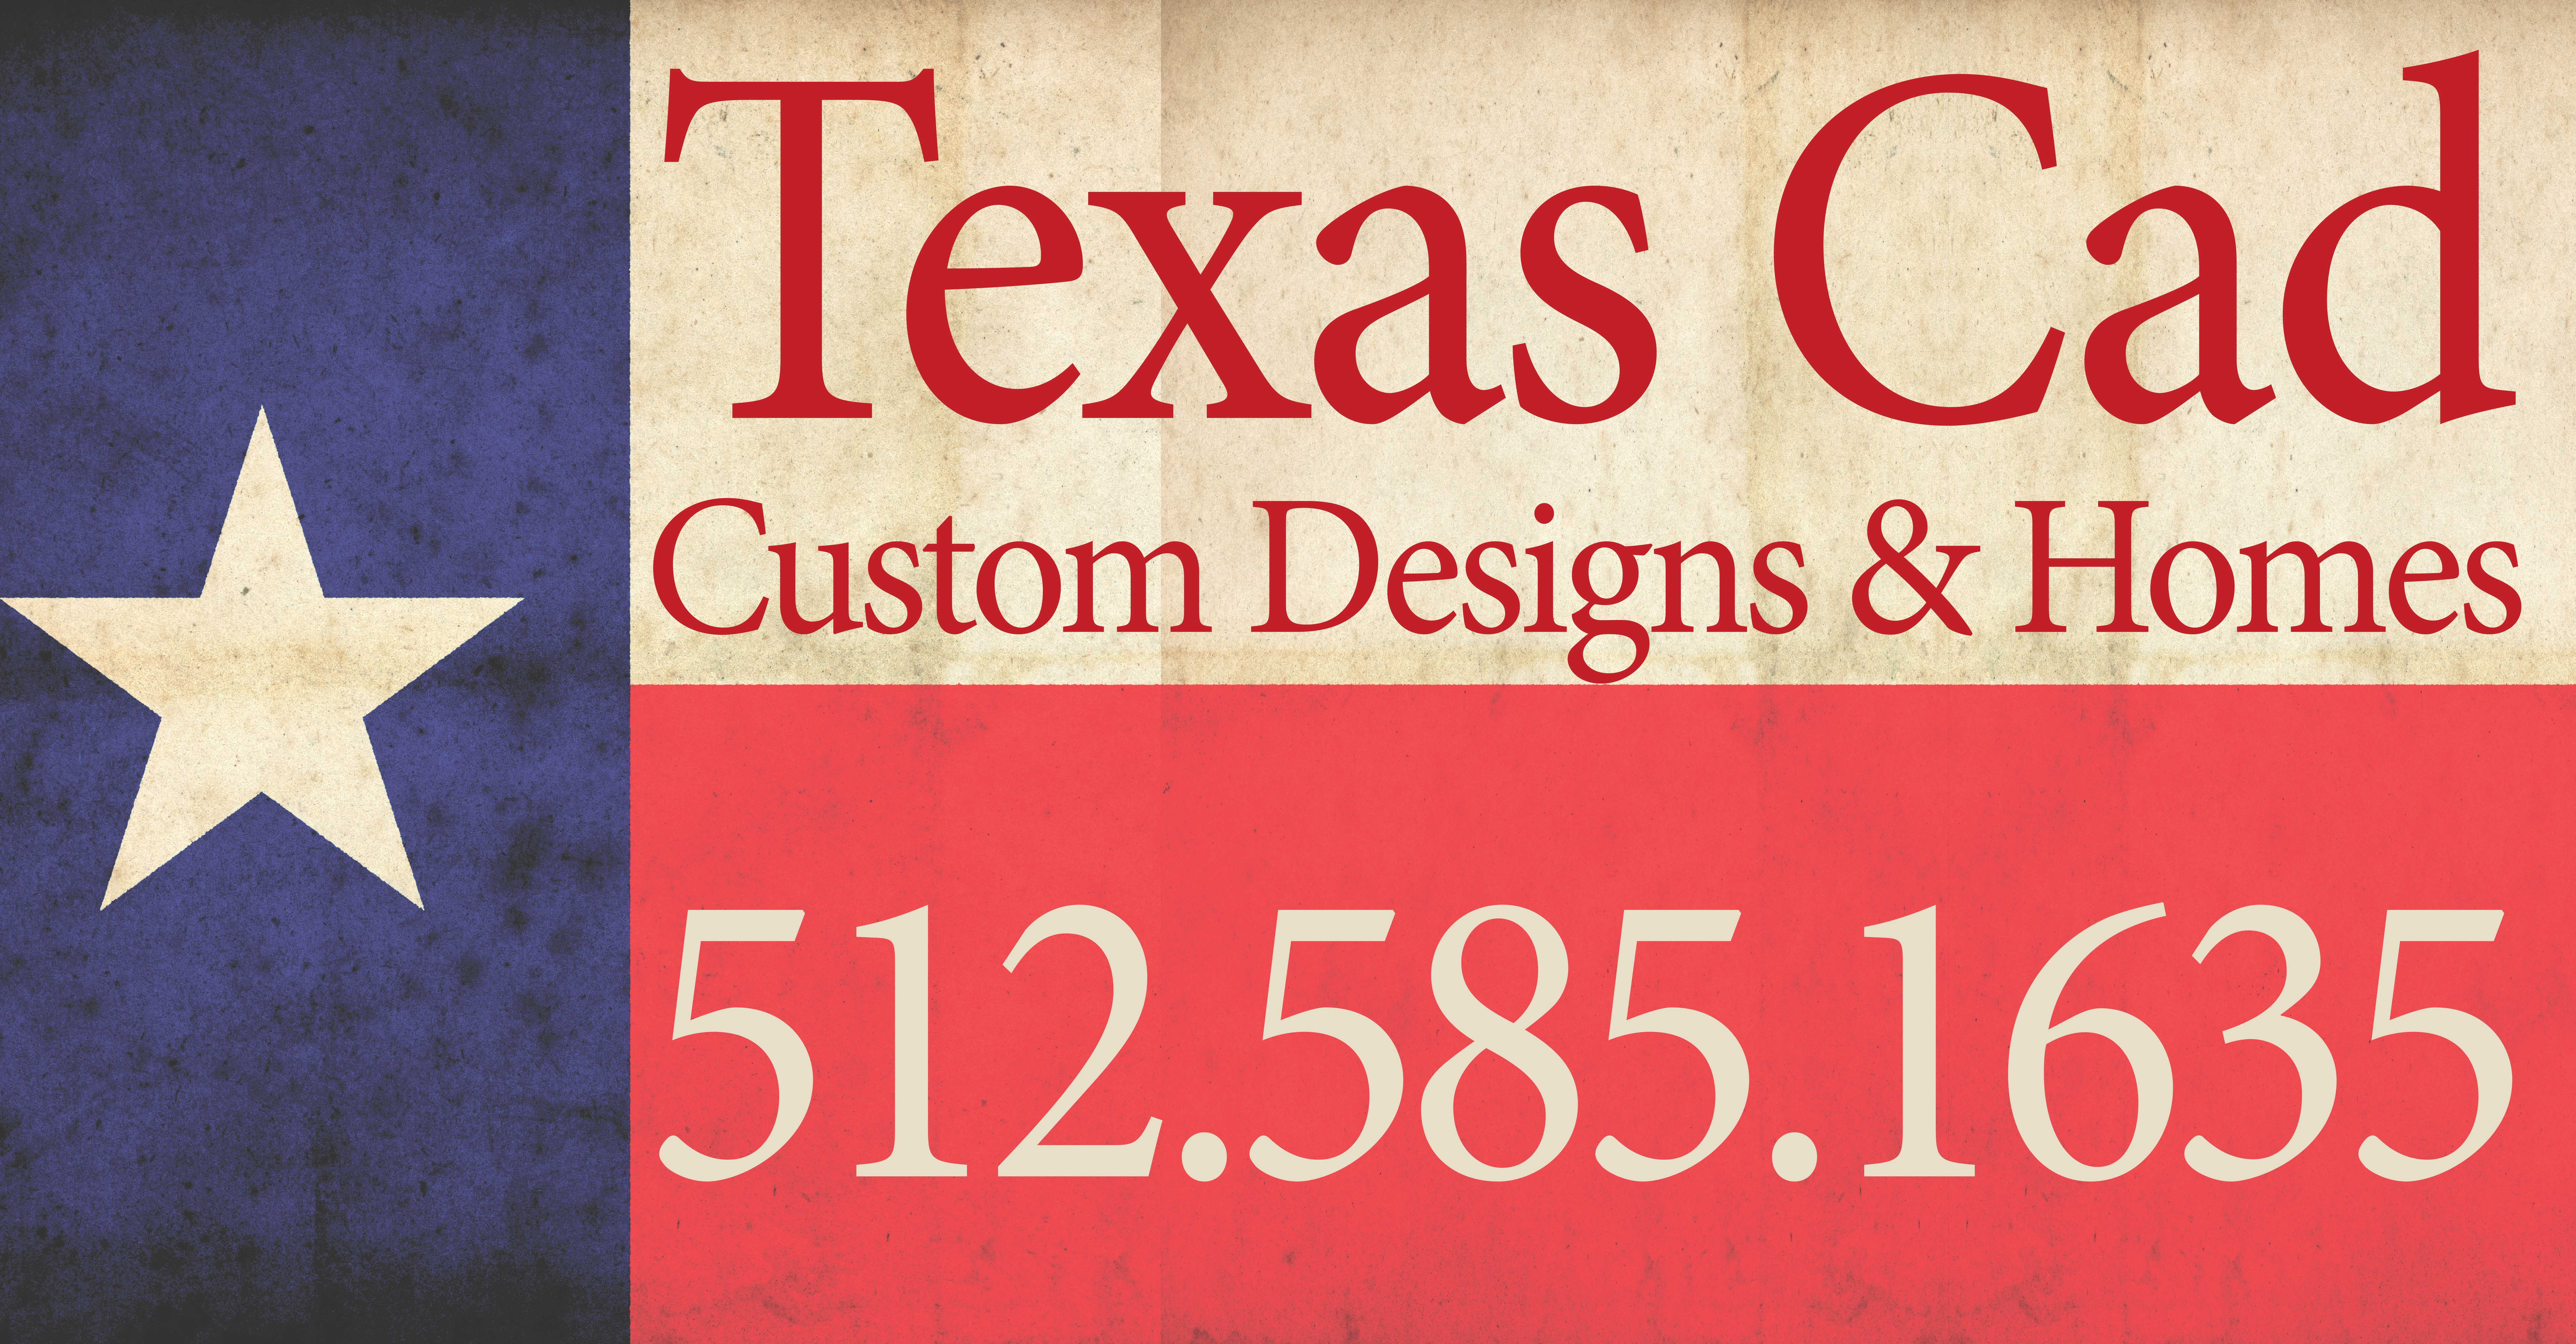 TexasCad Custom Homes Logo